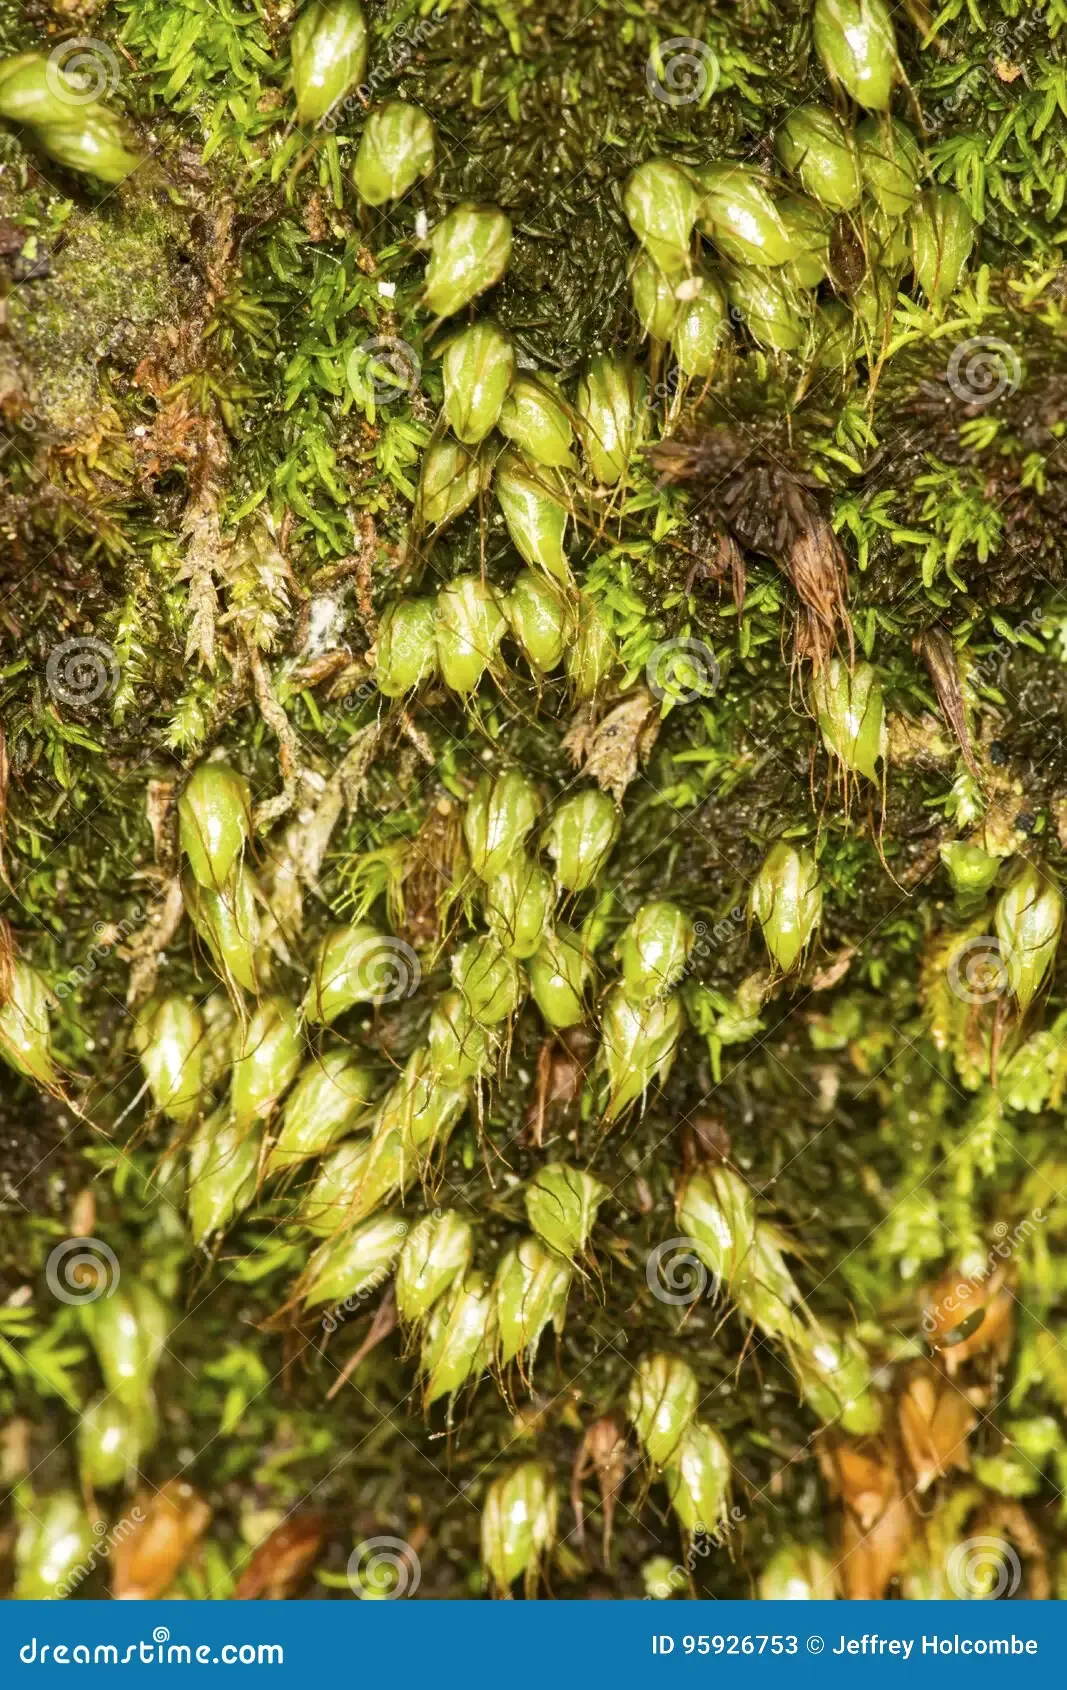 nut-moss-sporophytes-soil-newbury-new-hampshire-diphyscium-foliosum-looking-like-scared-rabbits-grass-according-95926753.jpg